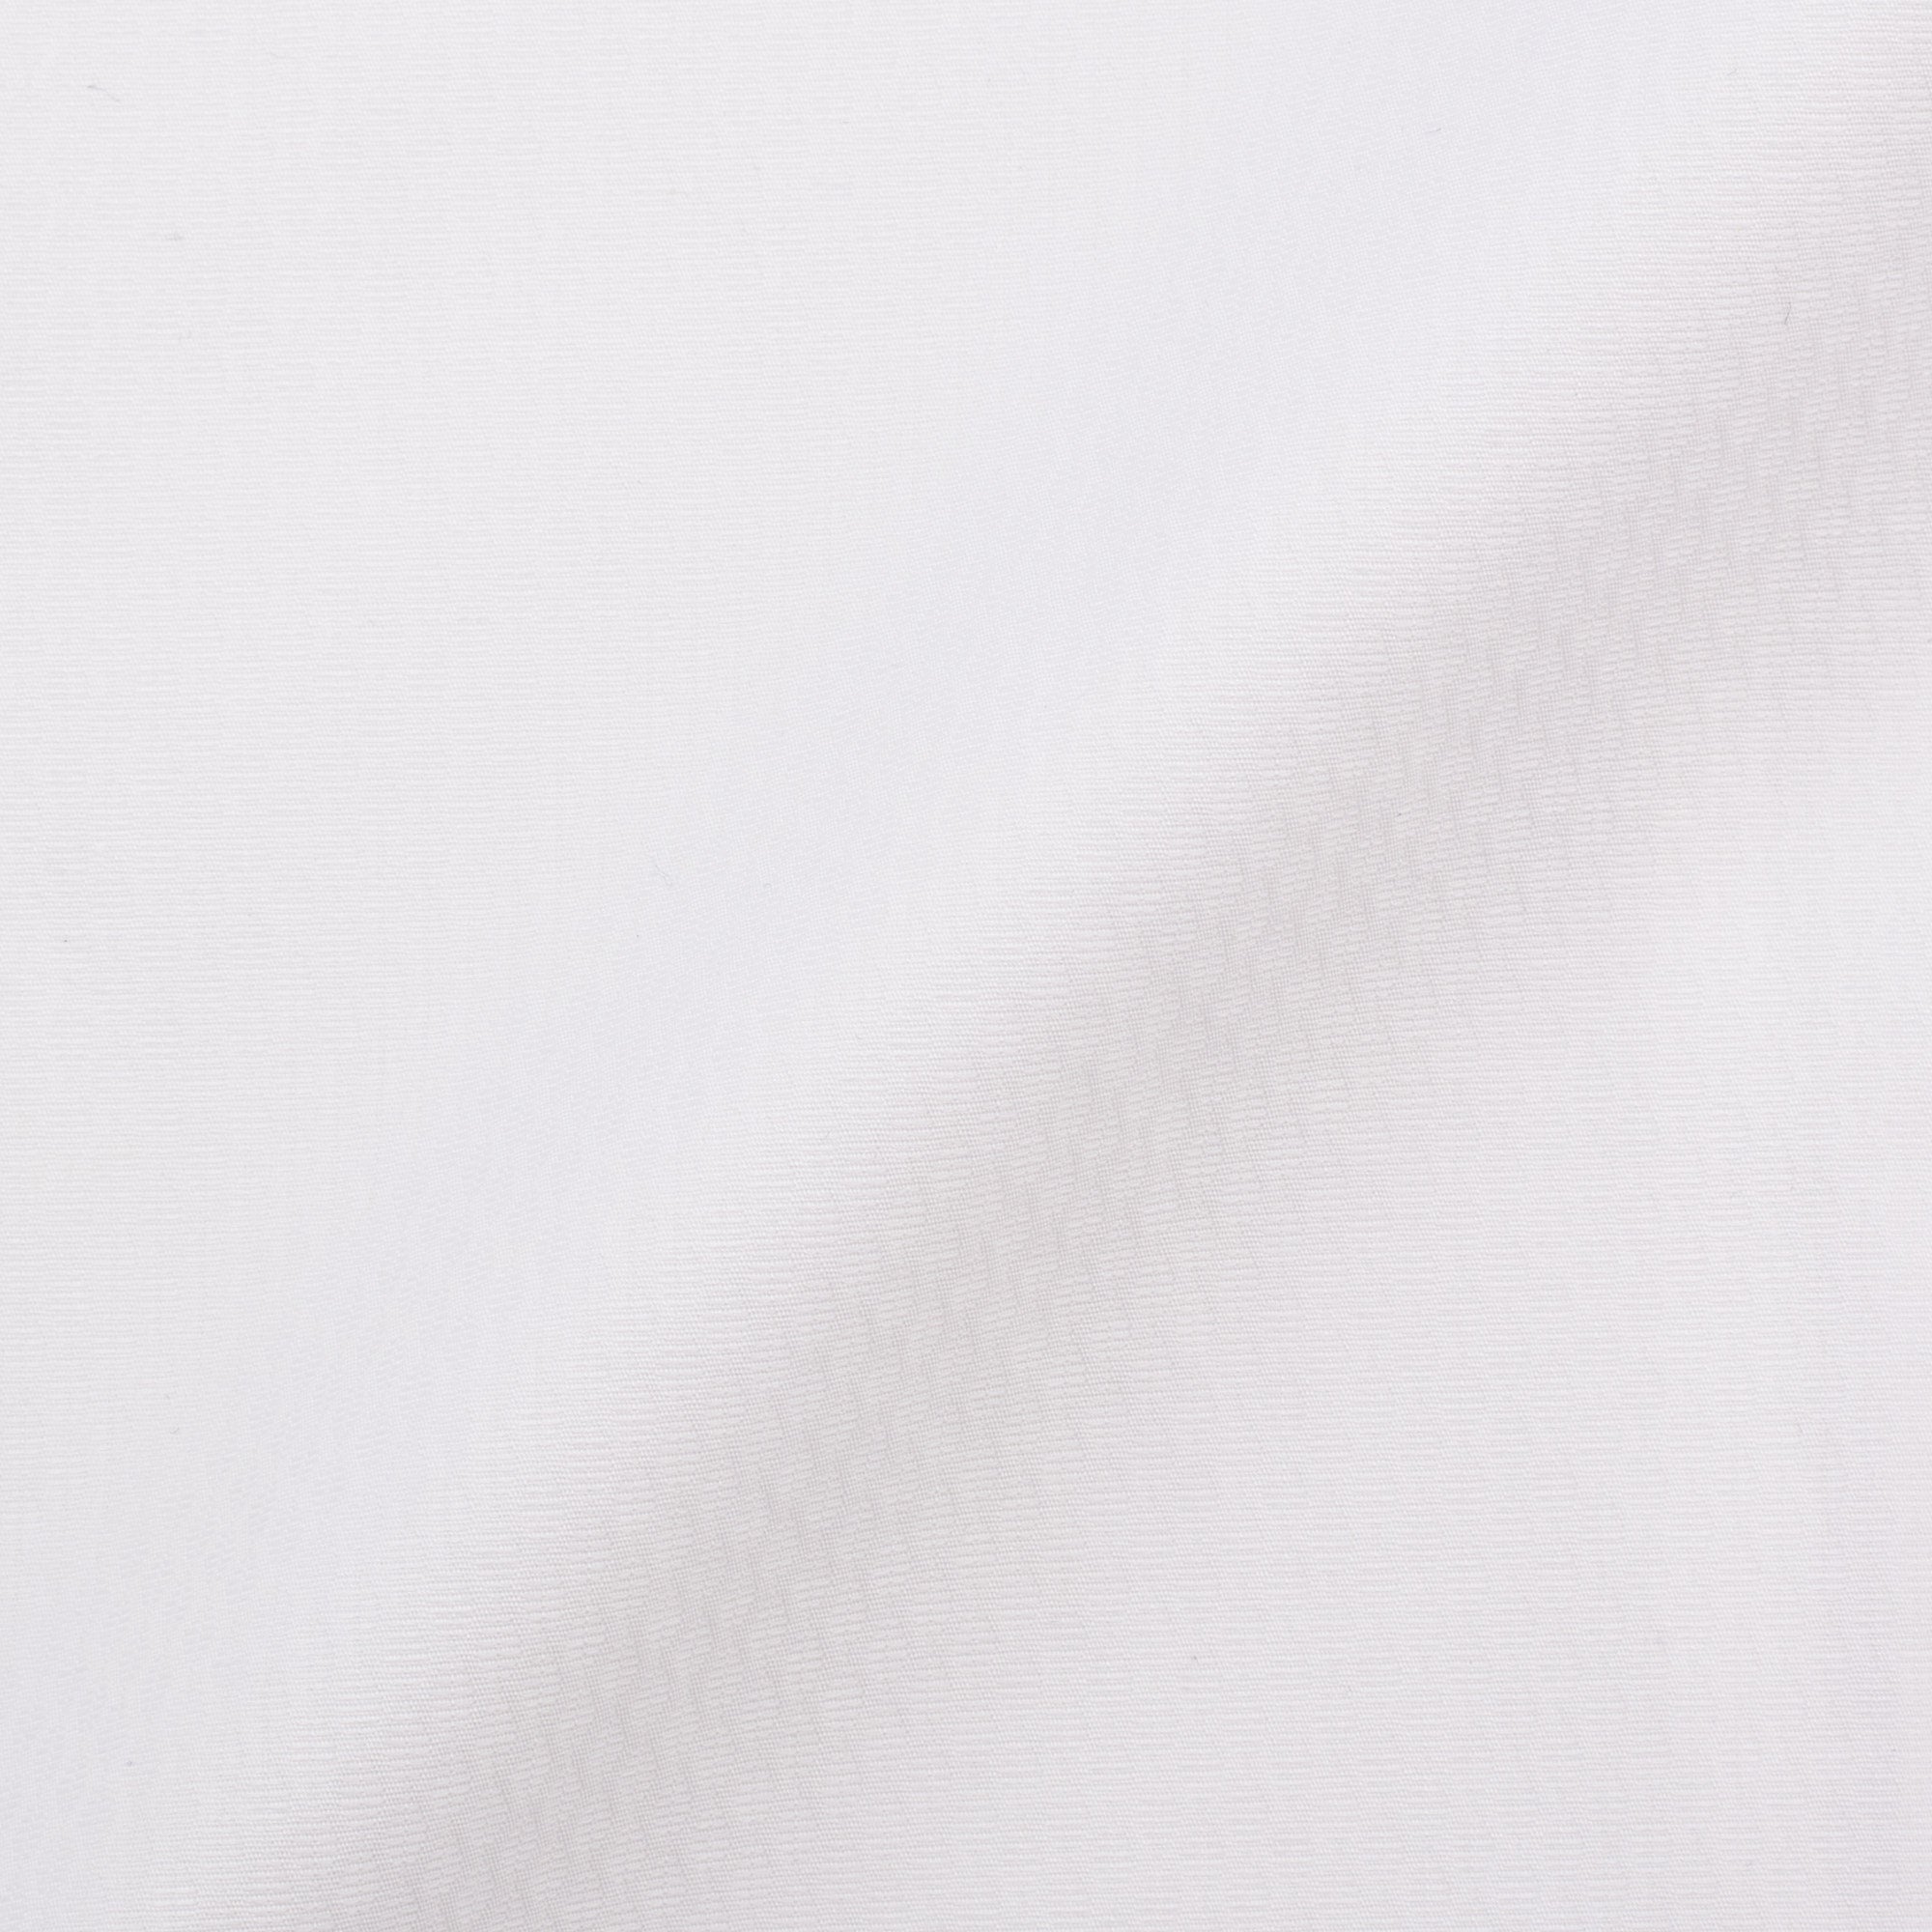 VINCENZO DI RUGGIERO Handmade White Jacquard Cotton Dress Shirt EU 40 US 15.75